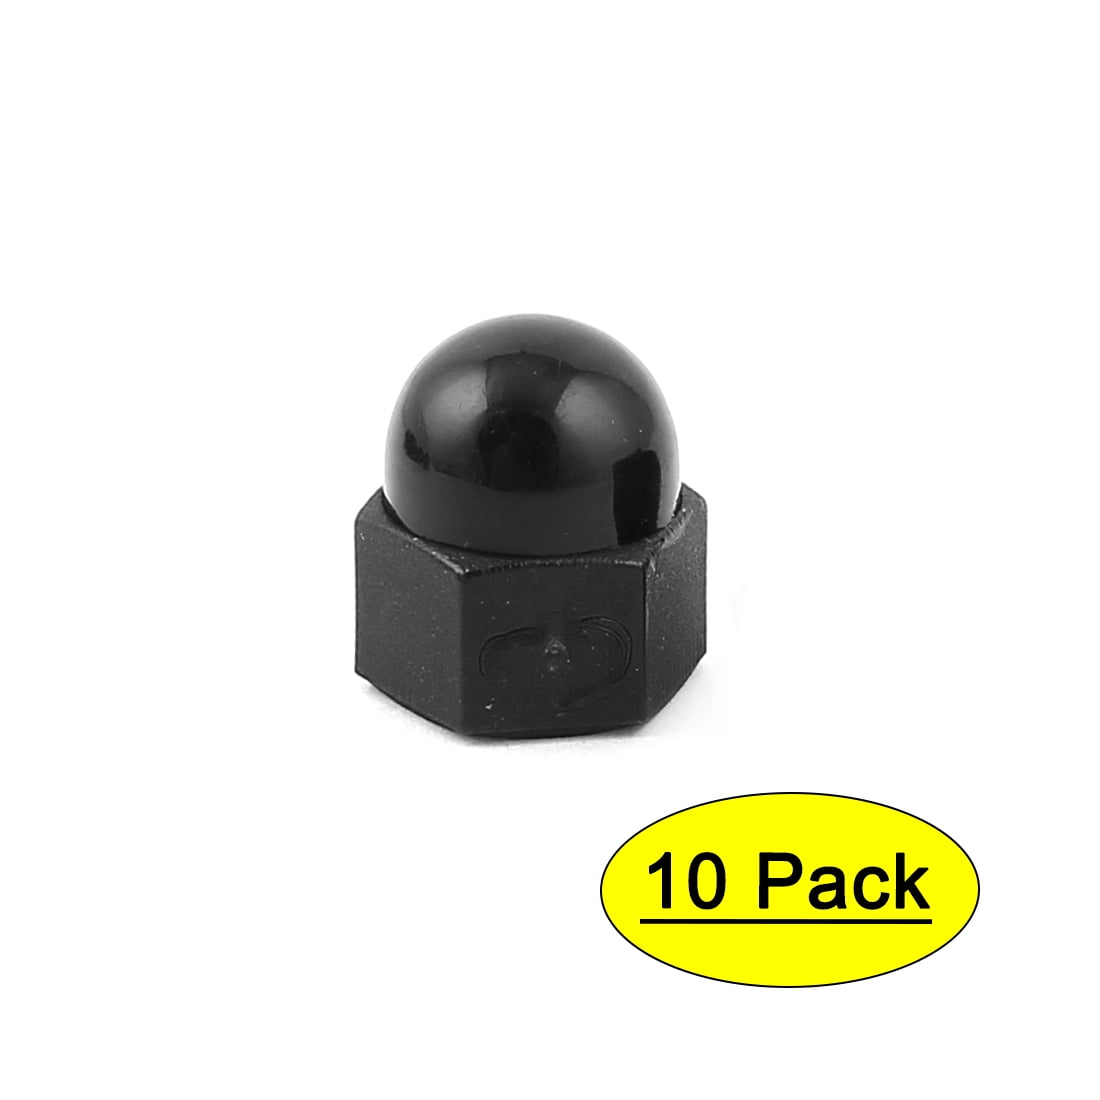 Black 8mm Nut/Bolt Cap M8 Pack of 10 Plastic